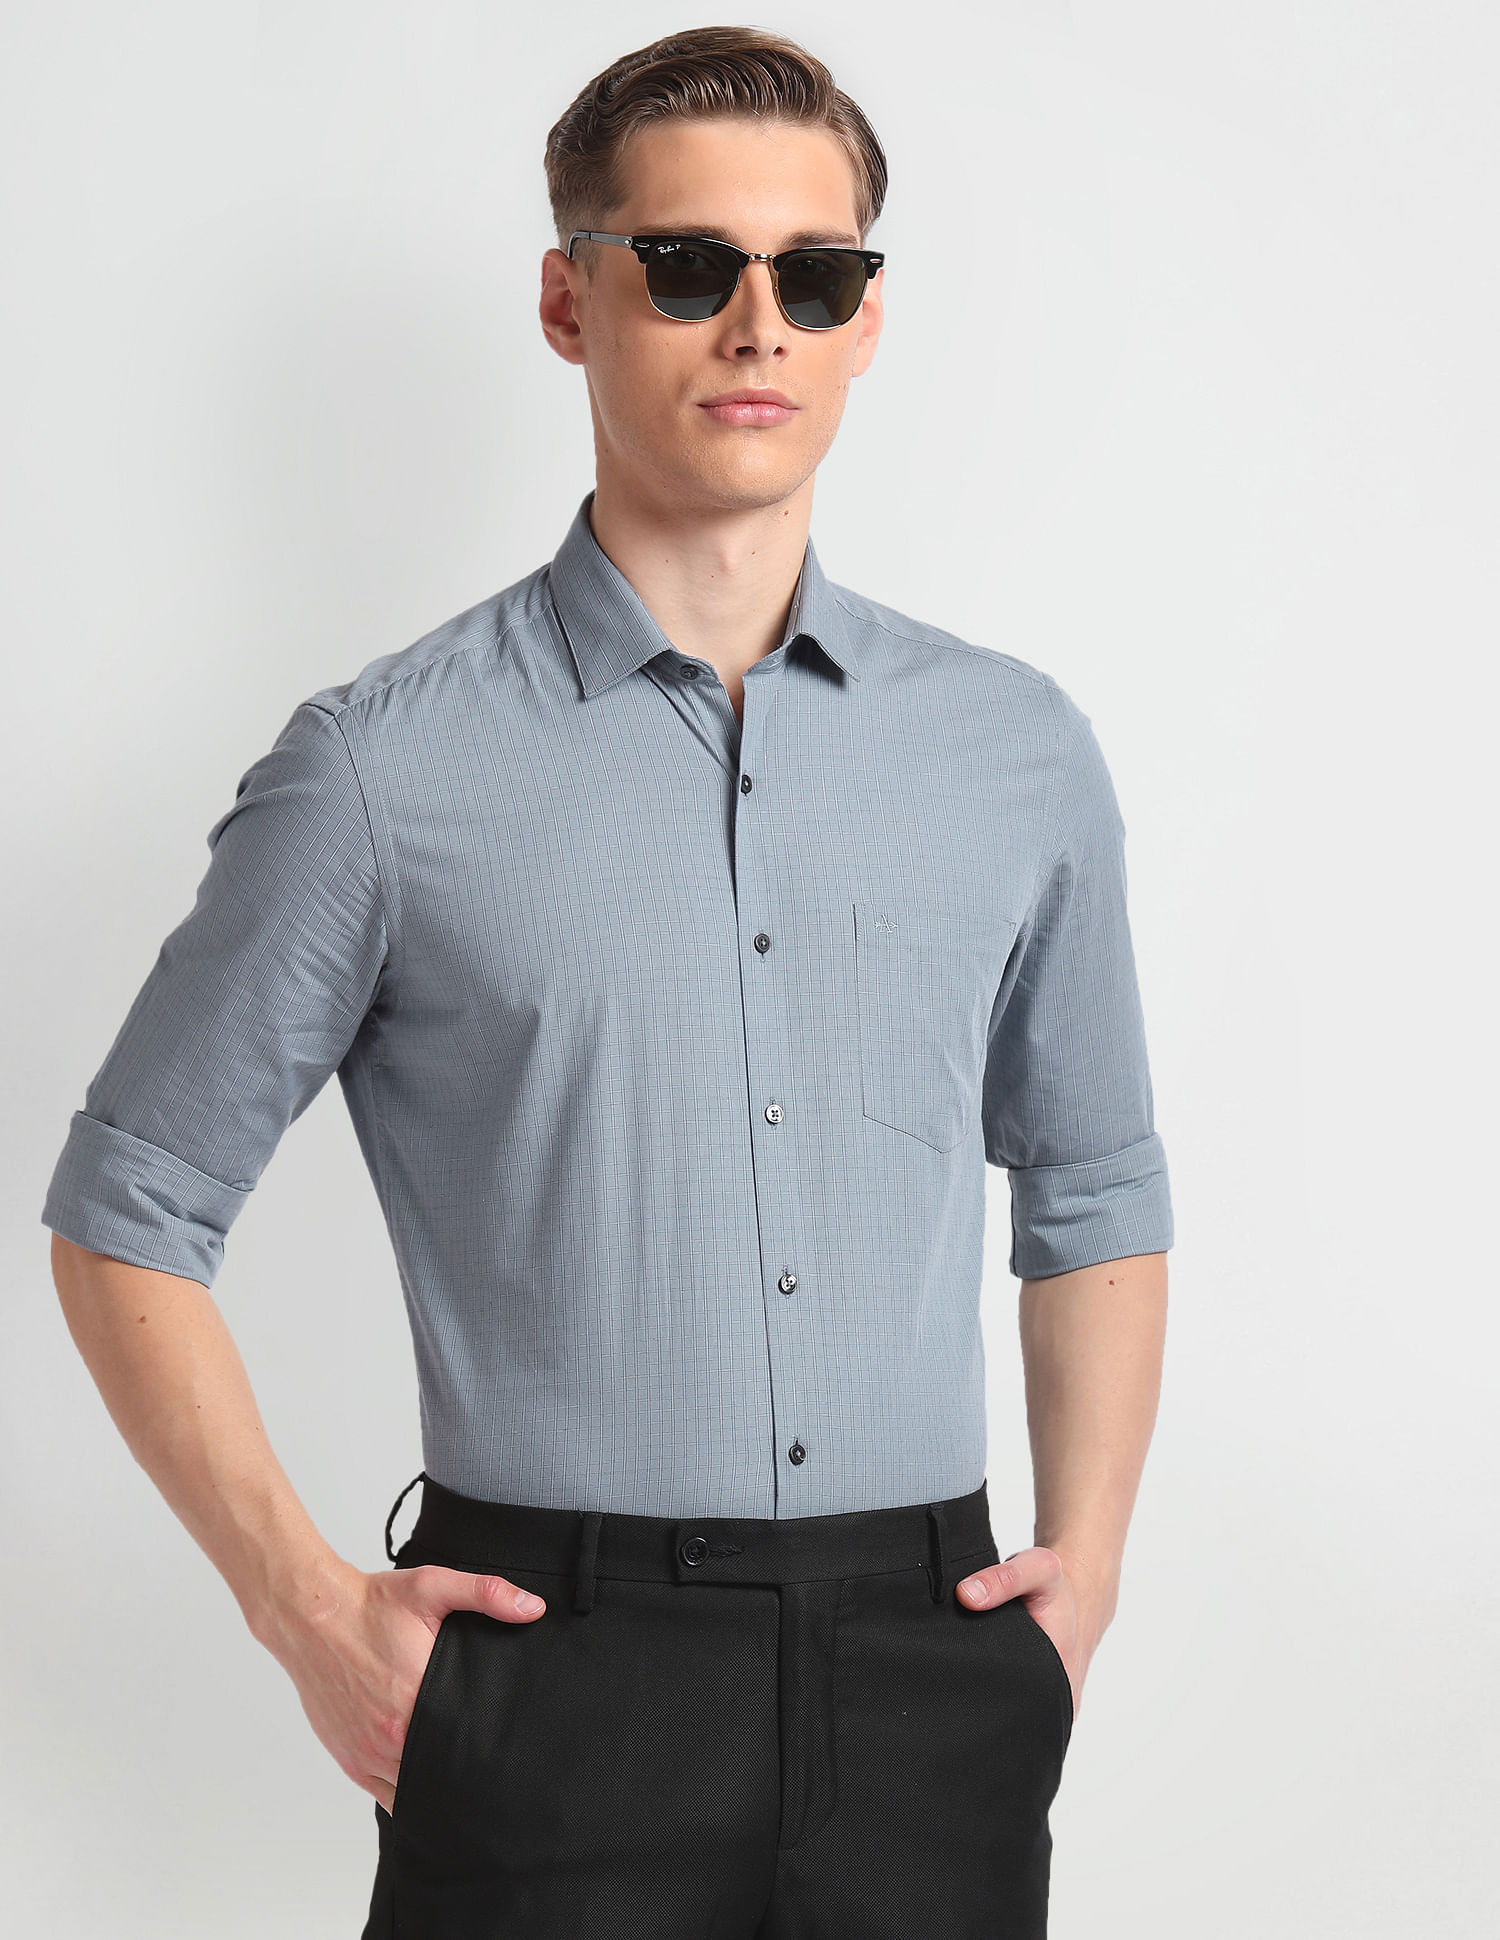 Security light grey shirt with black pants - My Custom Attire